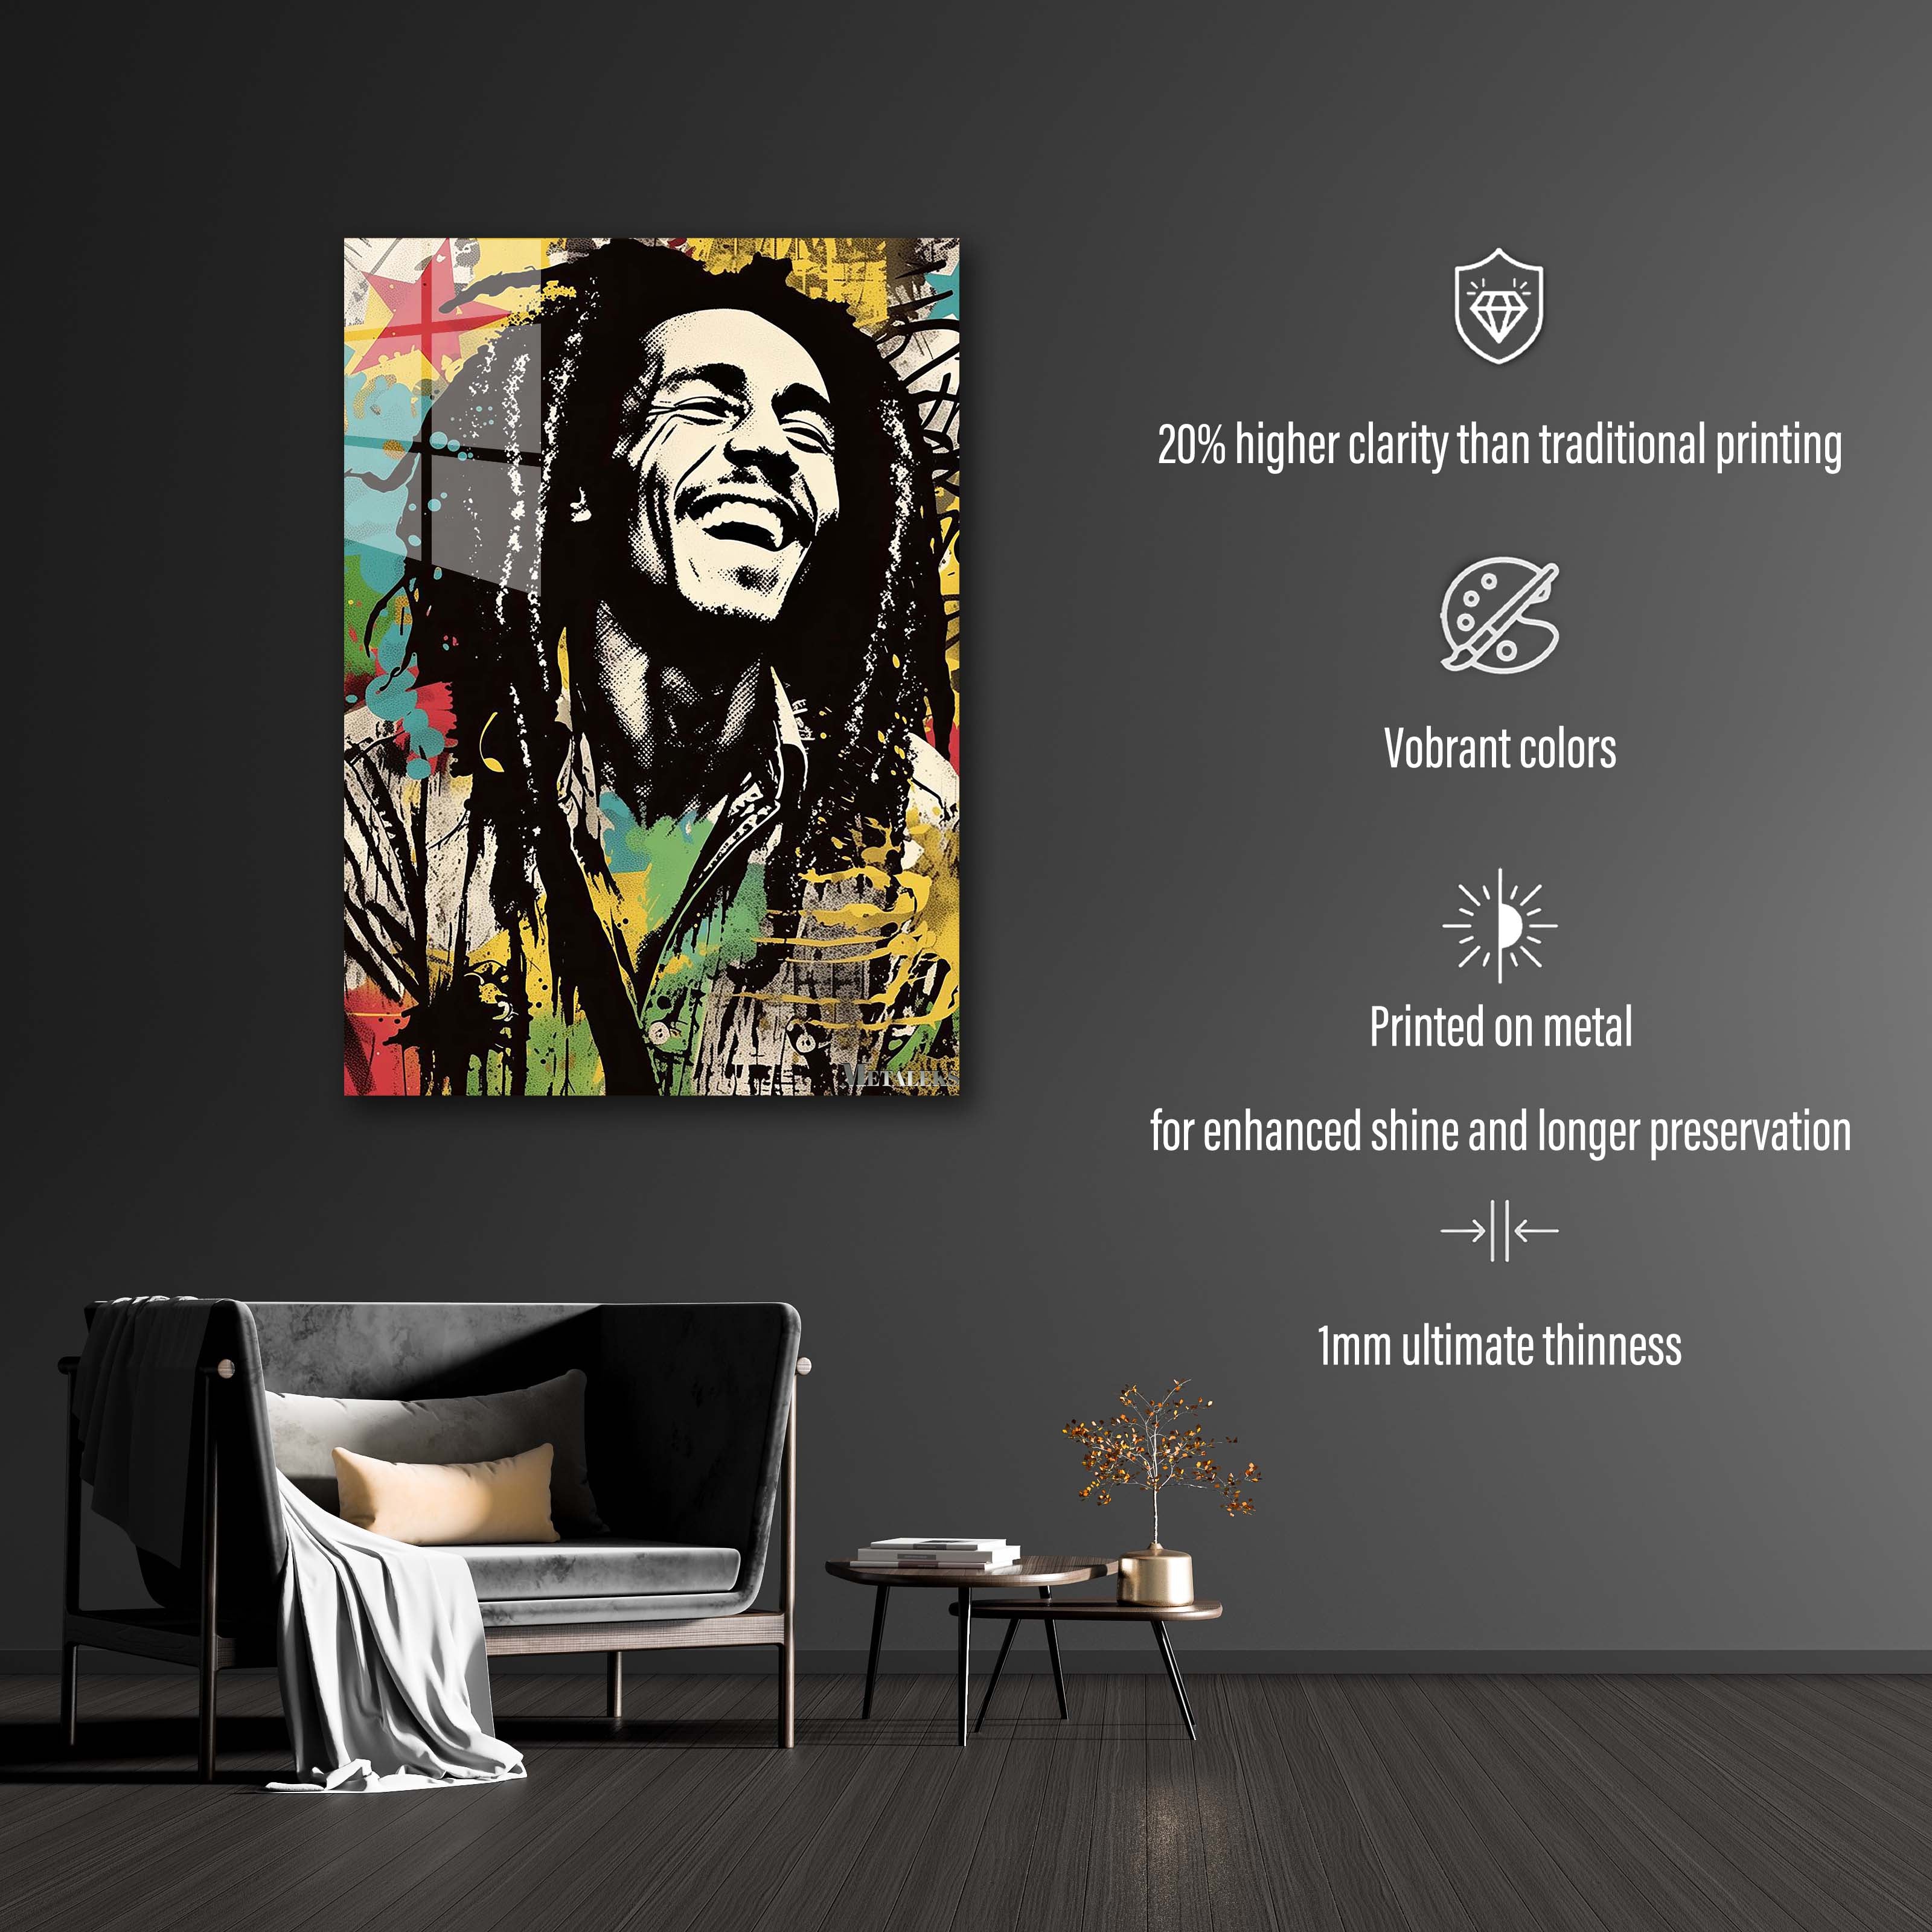 Pop Bob Marley-designed by @Silentheal